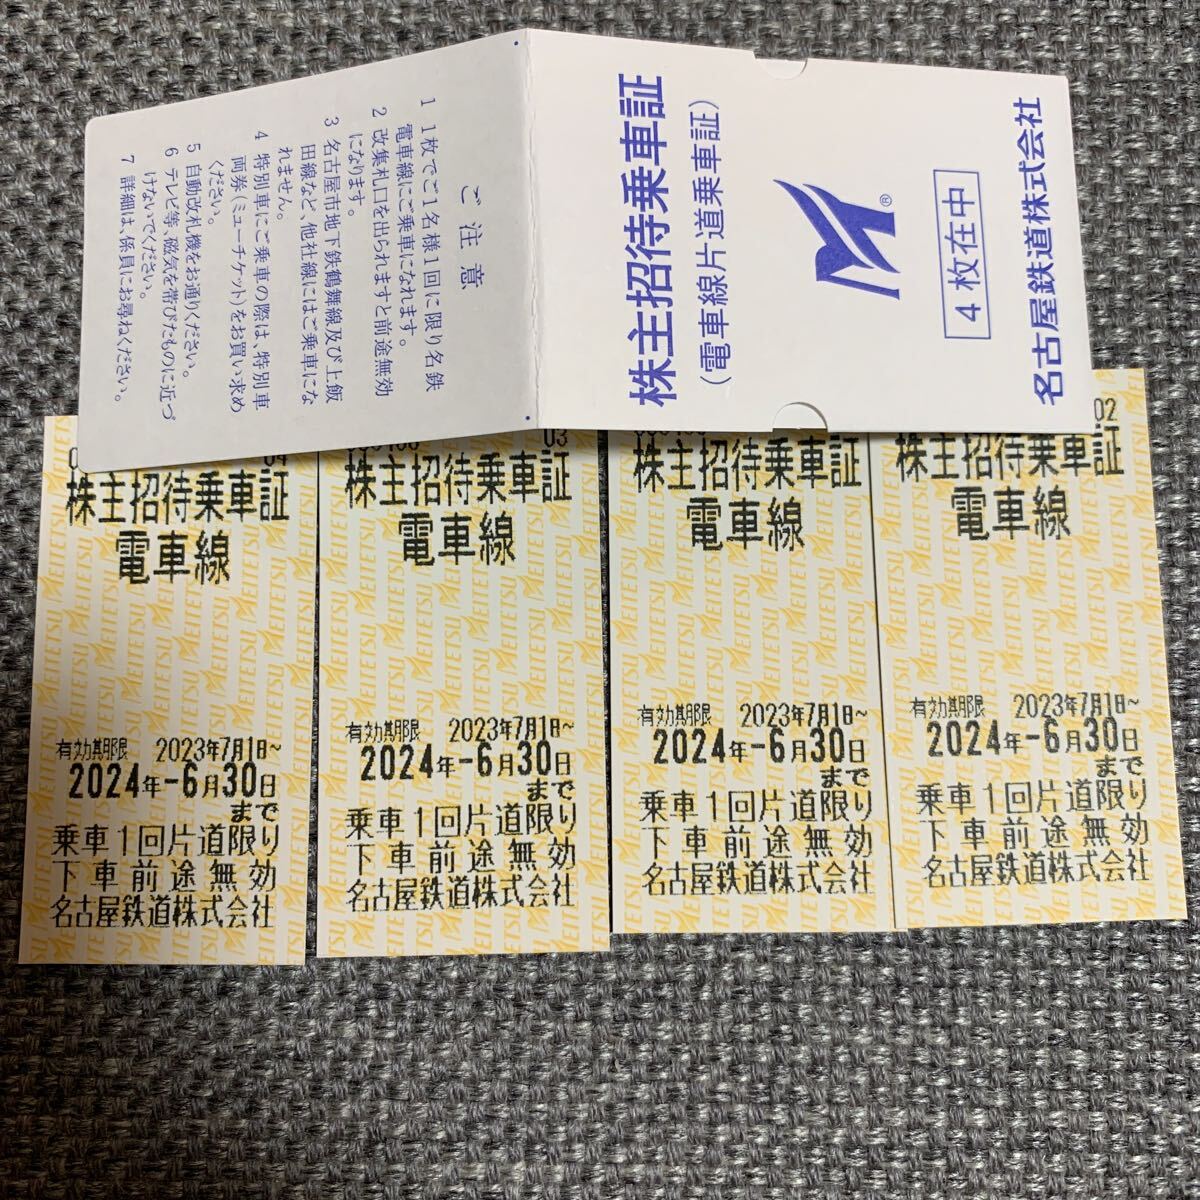  name iron stockholder invitation get into car proof 4 sheets Nagoya railroad stockholder hospitality get into car proof free shipping 